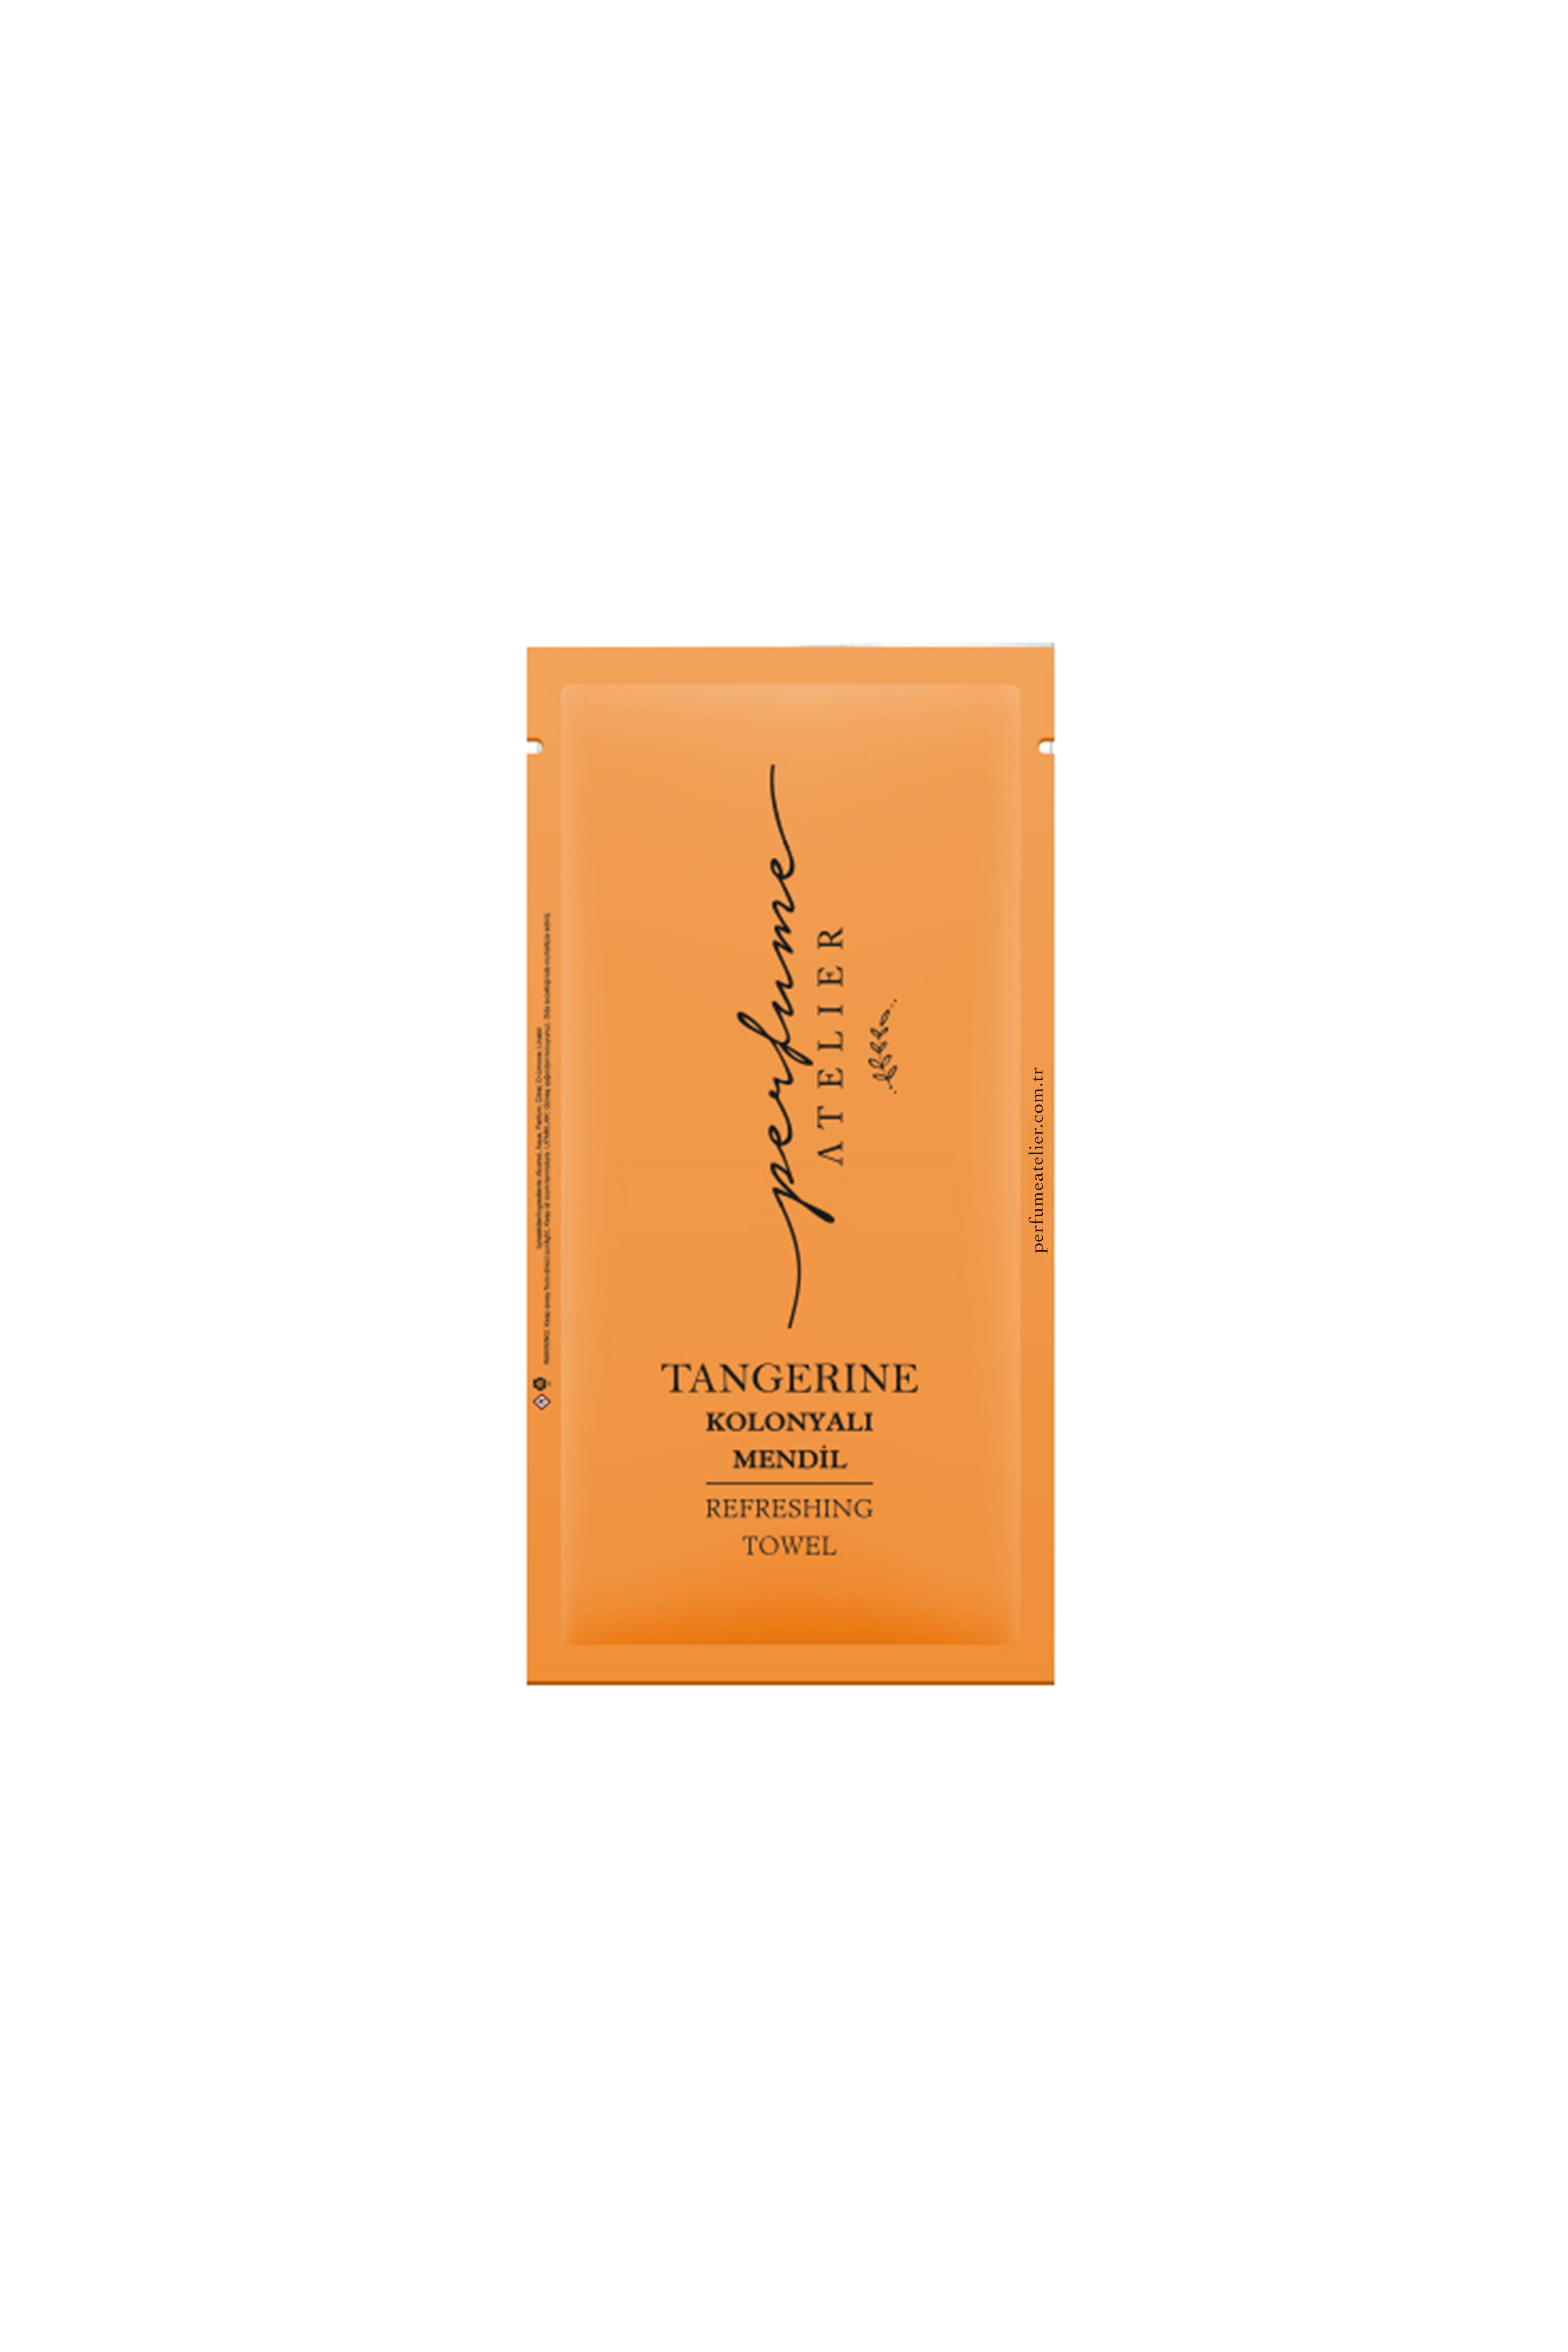 Tangerine 100's Refreshing Towels main variant image